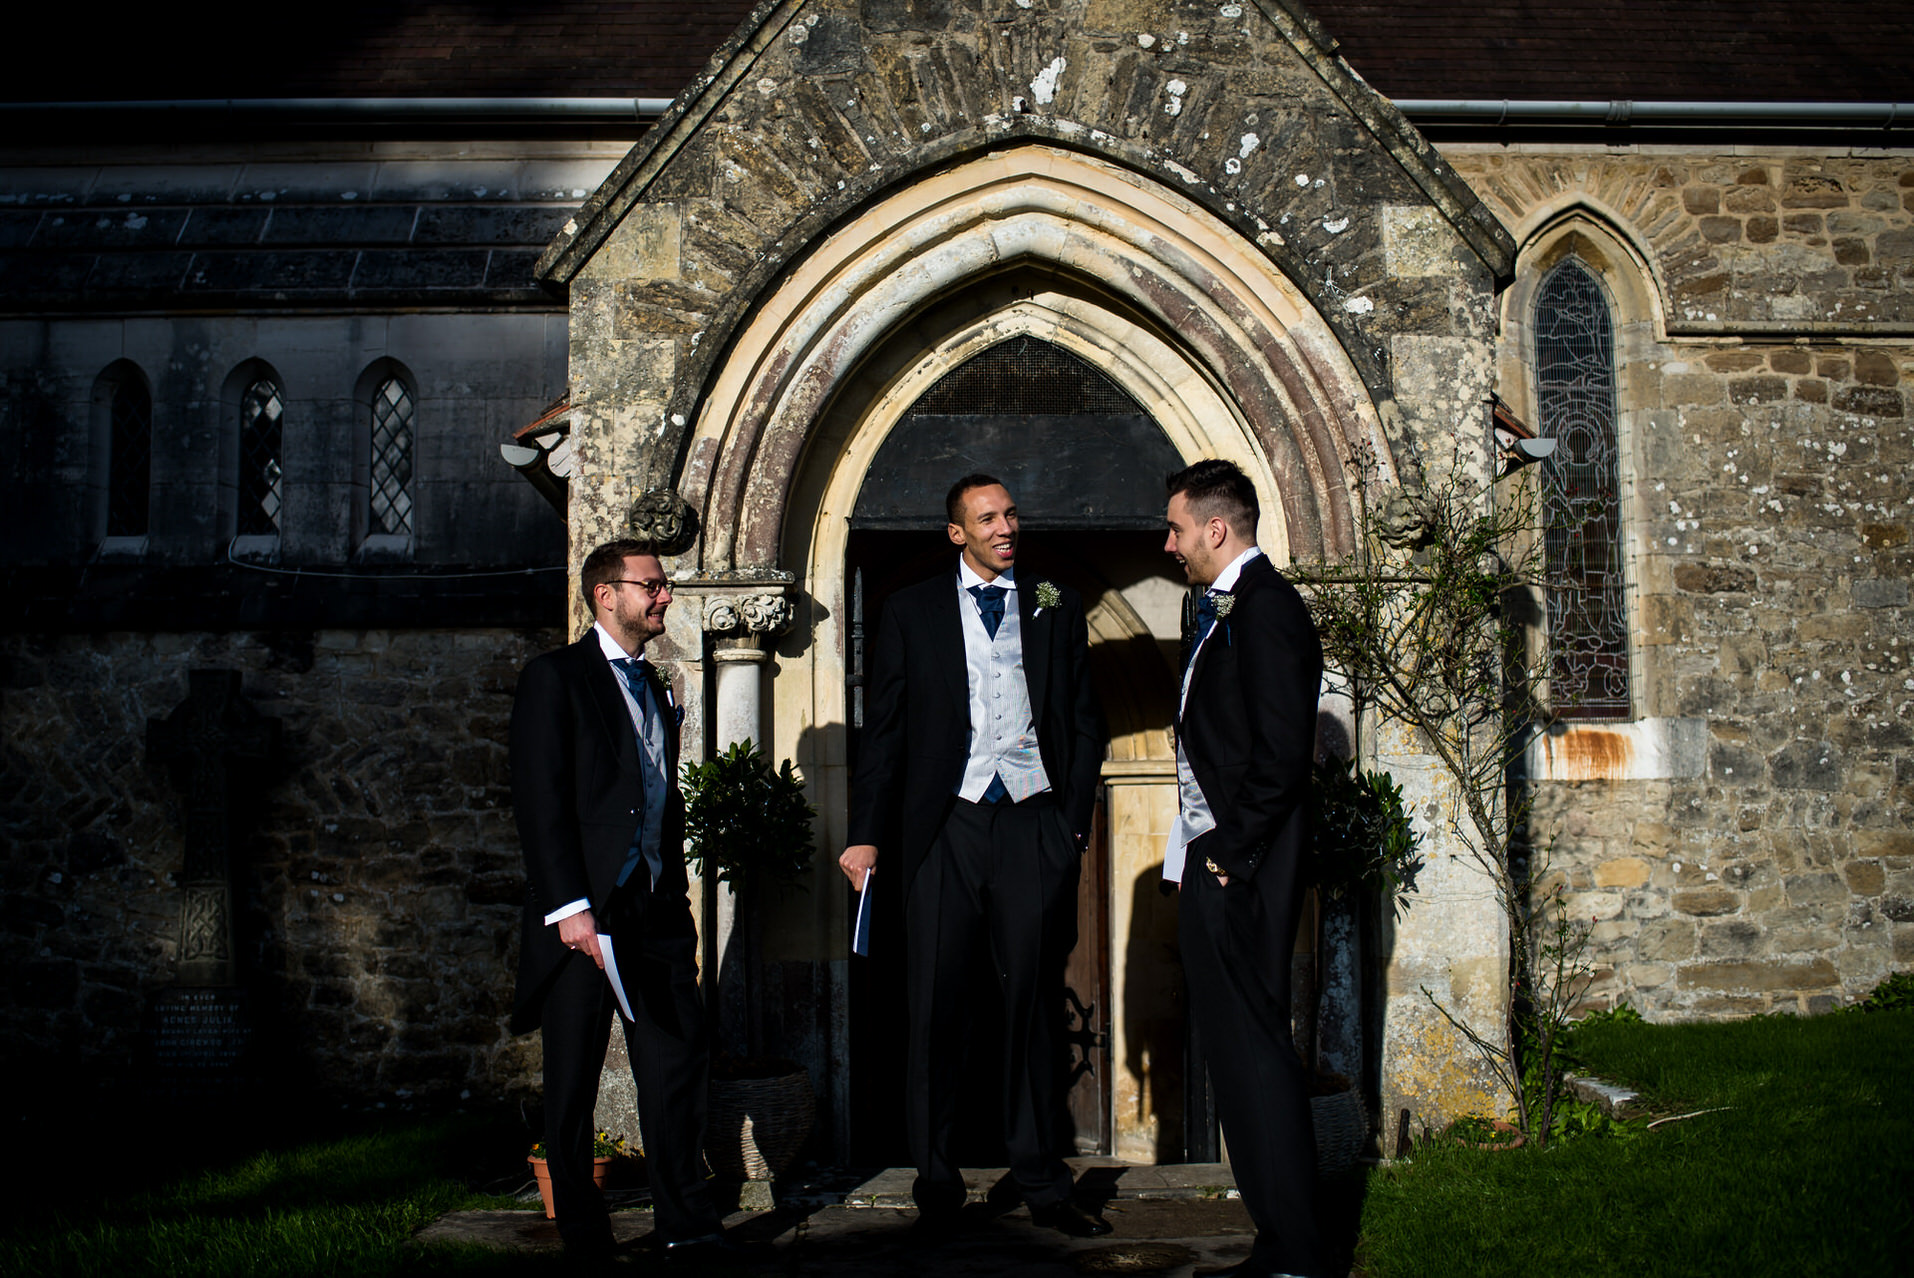 Isle of Wight church wedding photography 